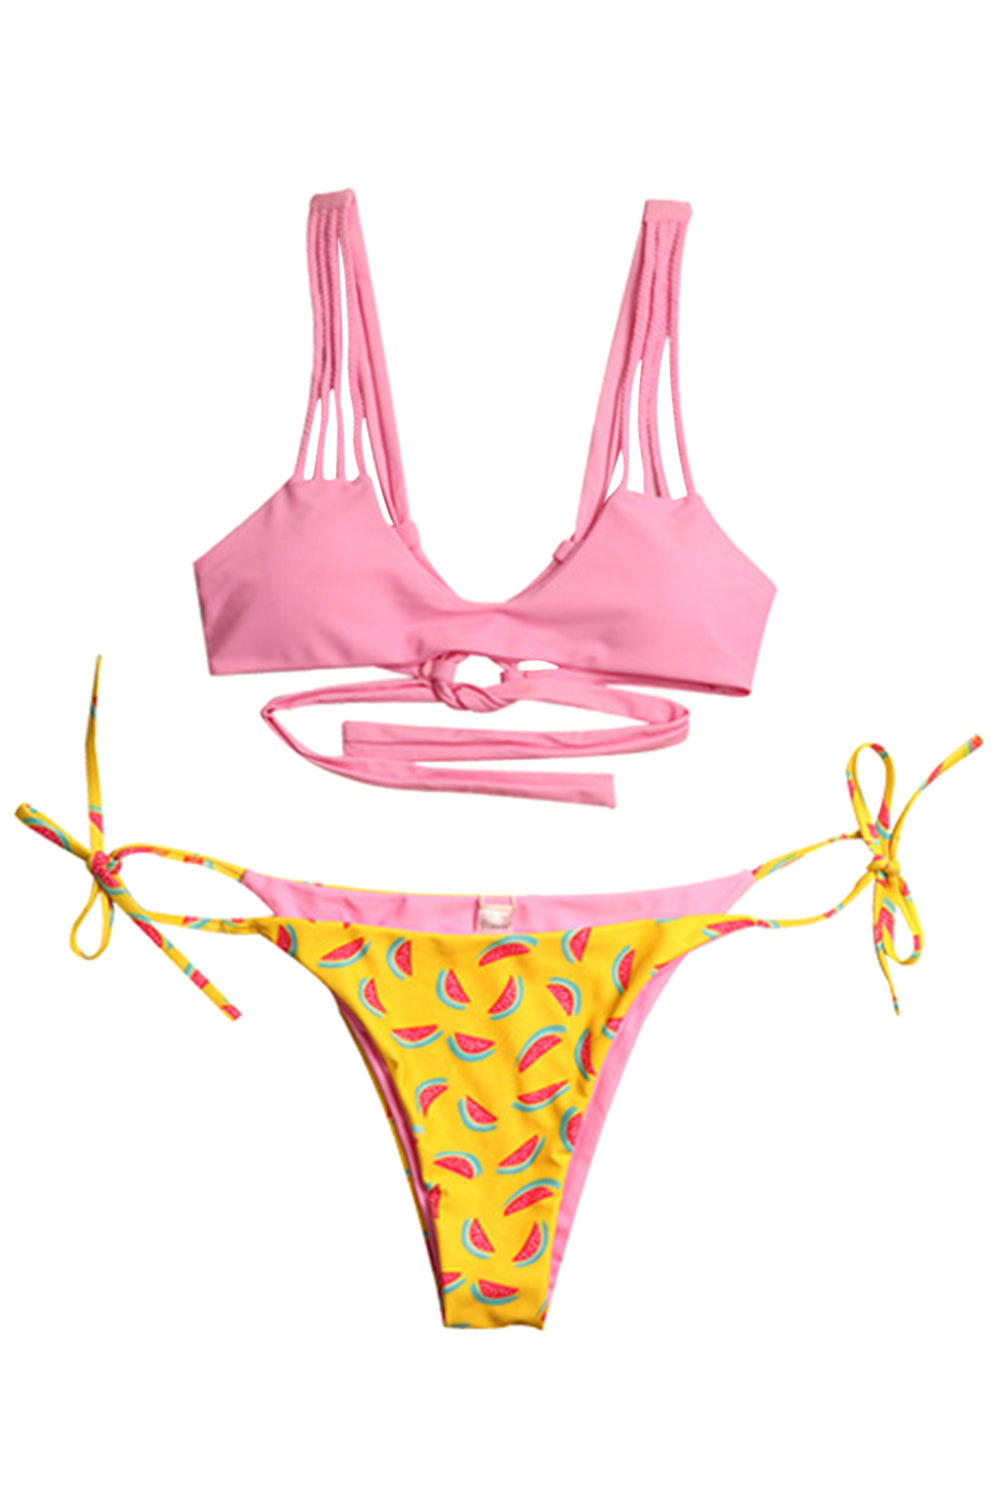 Iyasson Cute Watermelon Printing Bikini Swimwear With Strappy Detailing